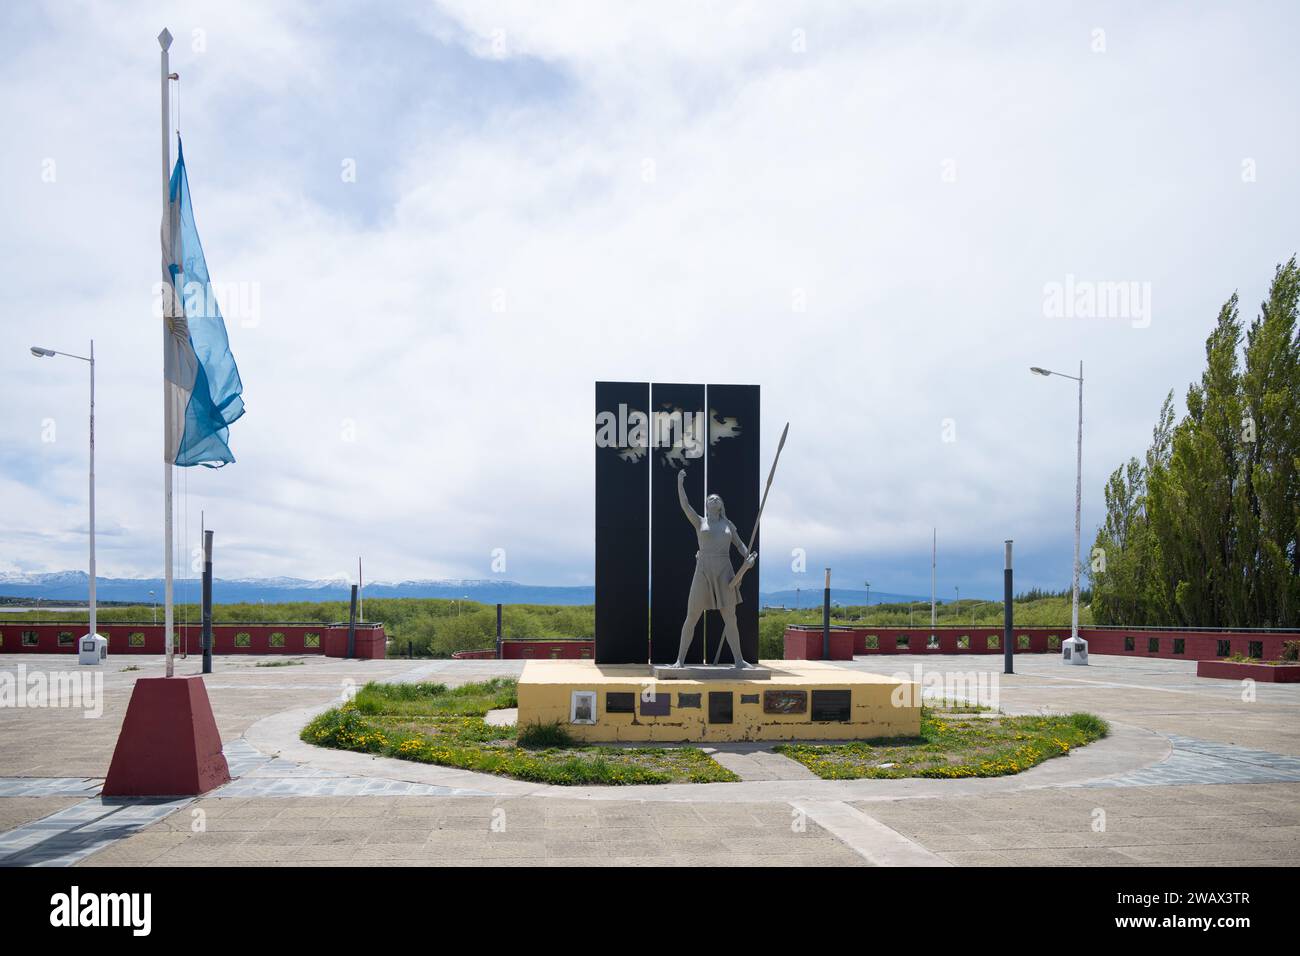 Falkland Islands (Malvinas) Conflict Memorial & Statue, El Calafate, Argentina Foto Stock